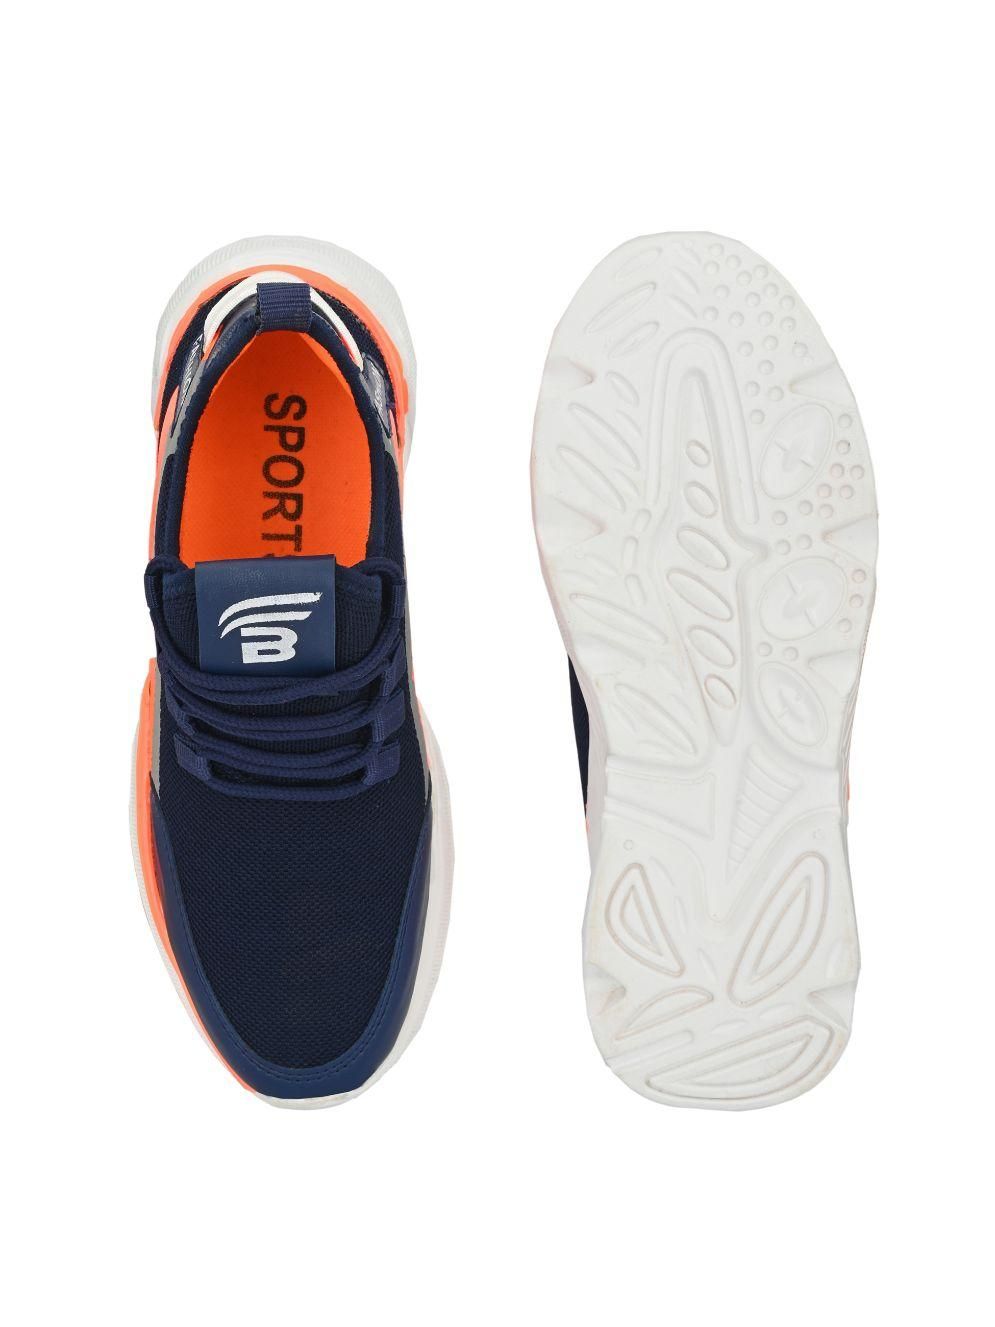 Bucik Men's Orange Mesh Lace-Up Running Sports Shoes